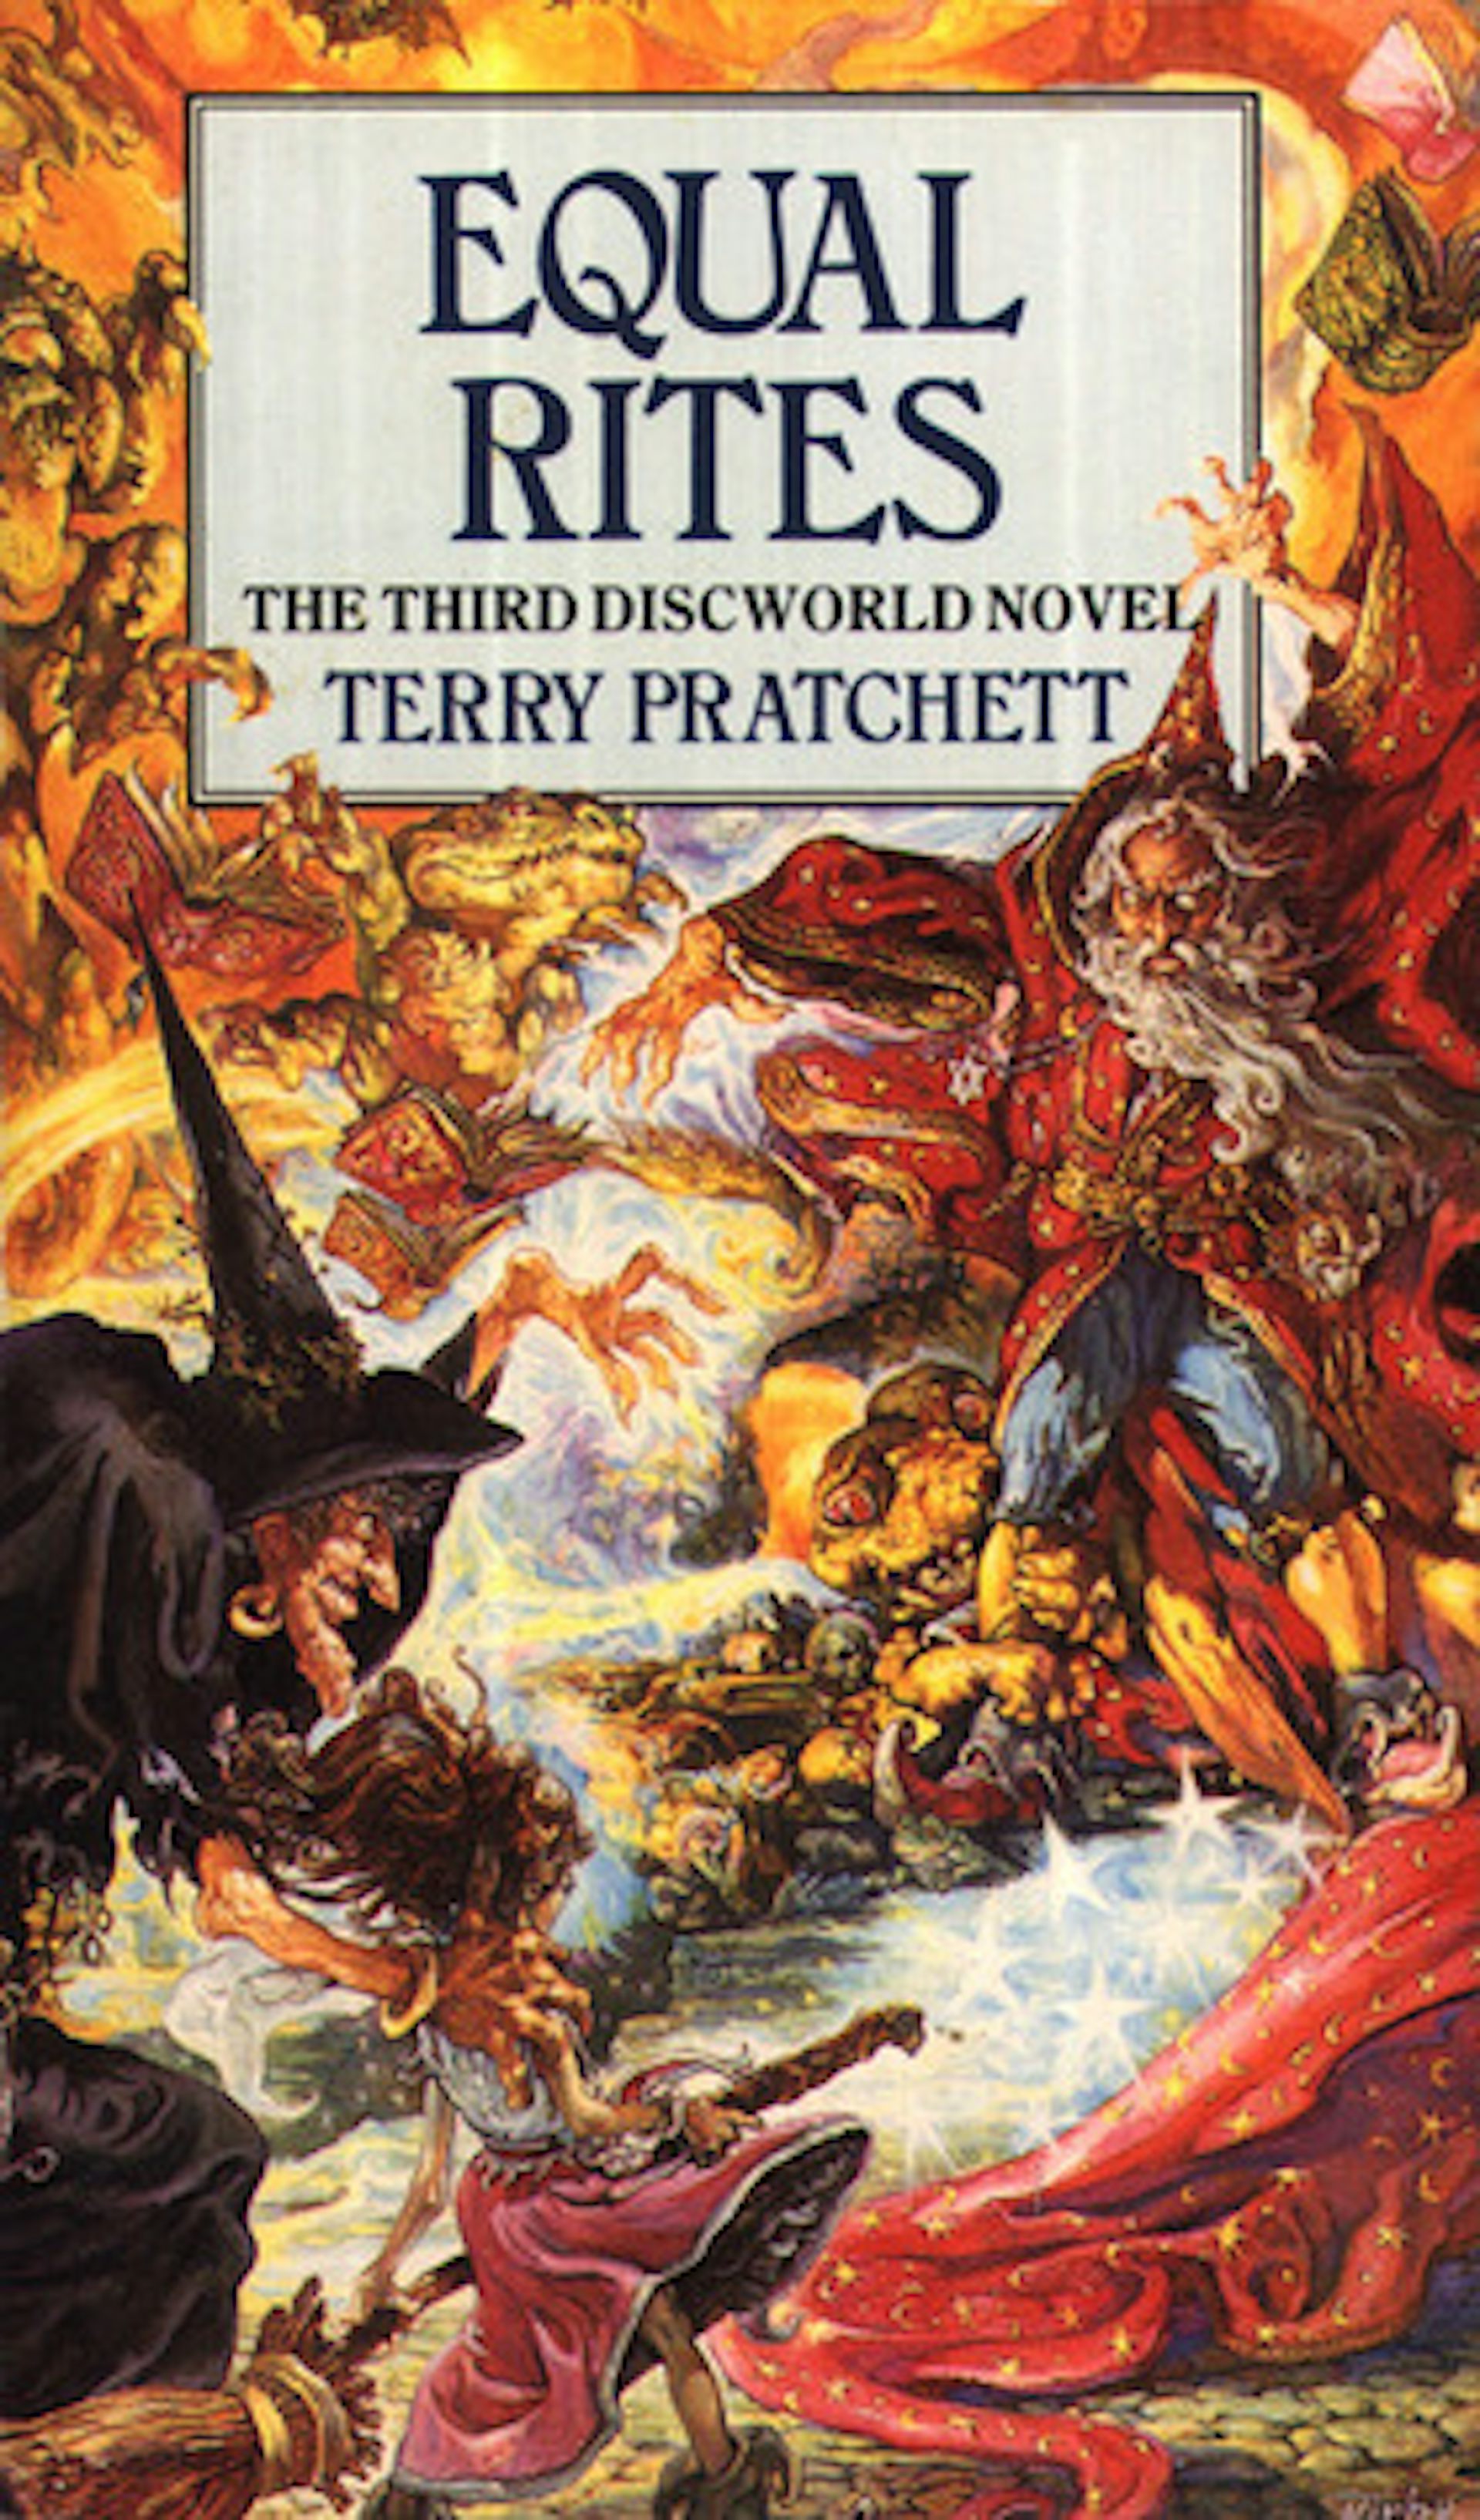 Terry Pratchett Discworld Reading Order Chart